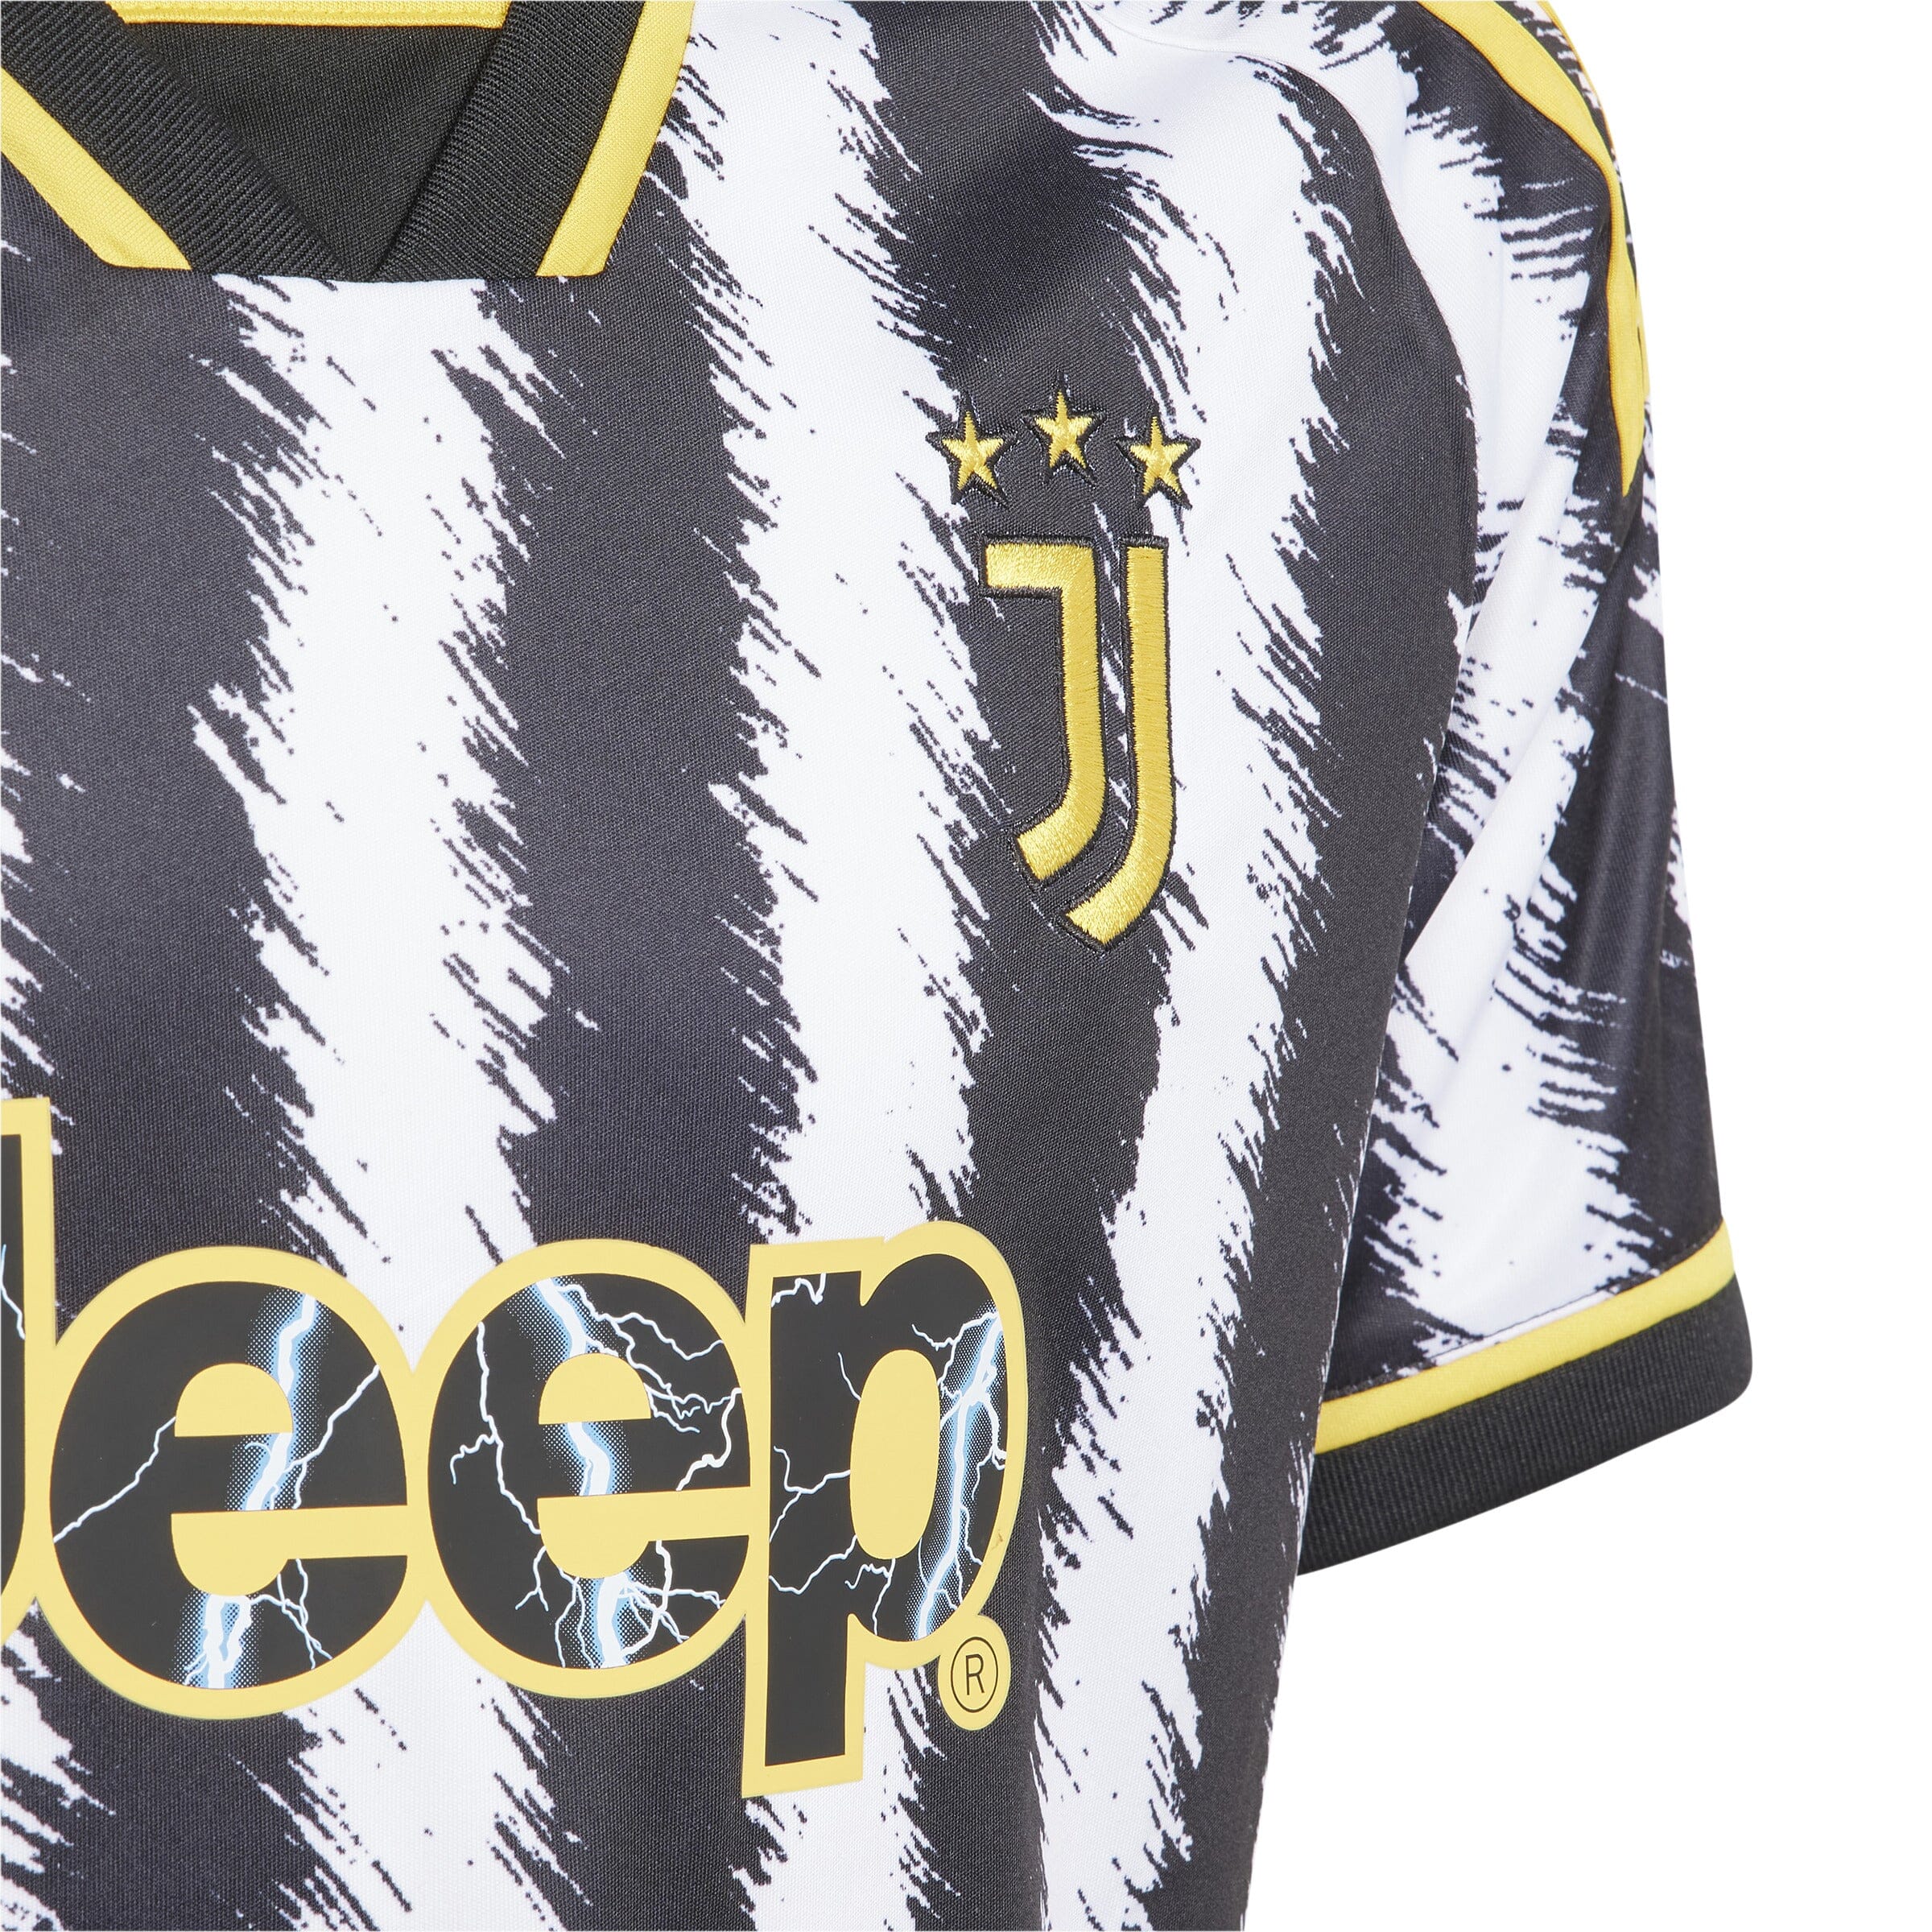 23/24 home shirt, Juventus Turin Jersey